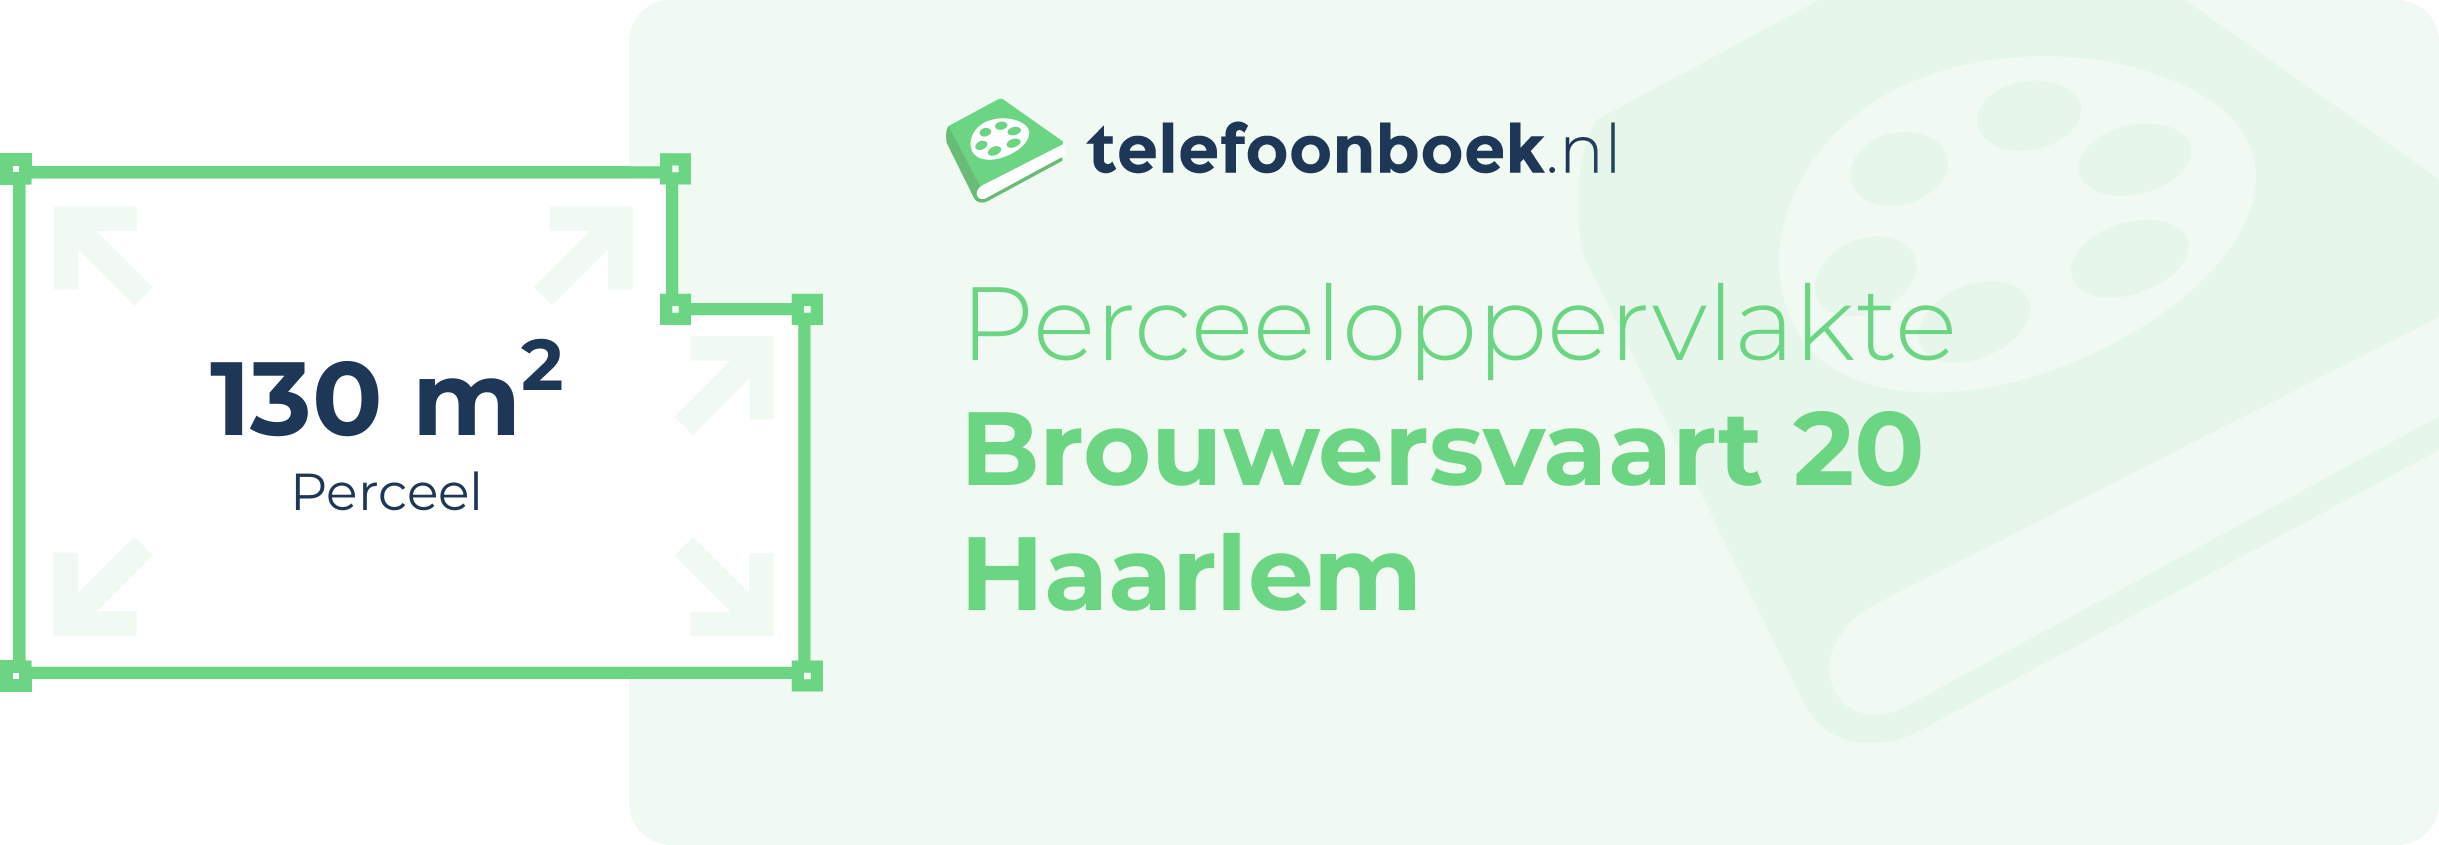 Perceeloppervlakte Brouwersvaart 20 Haarlem